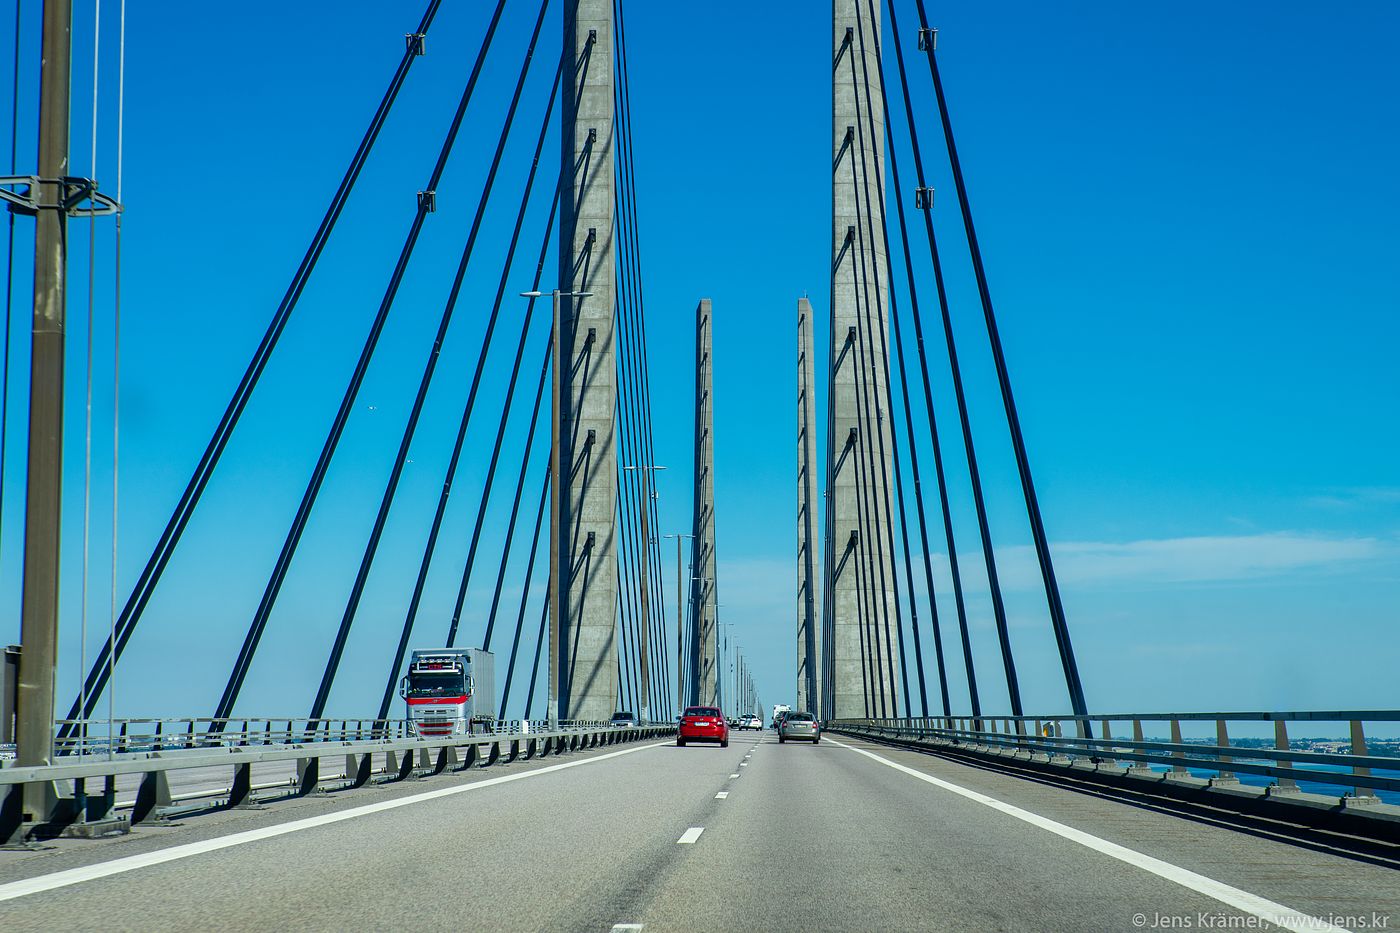 Leaving Denmark by bridge